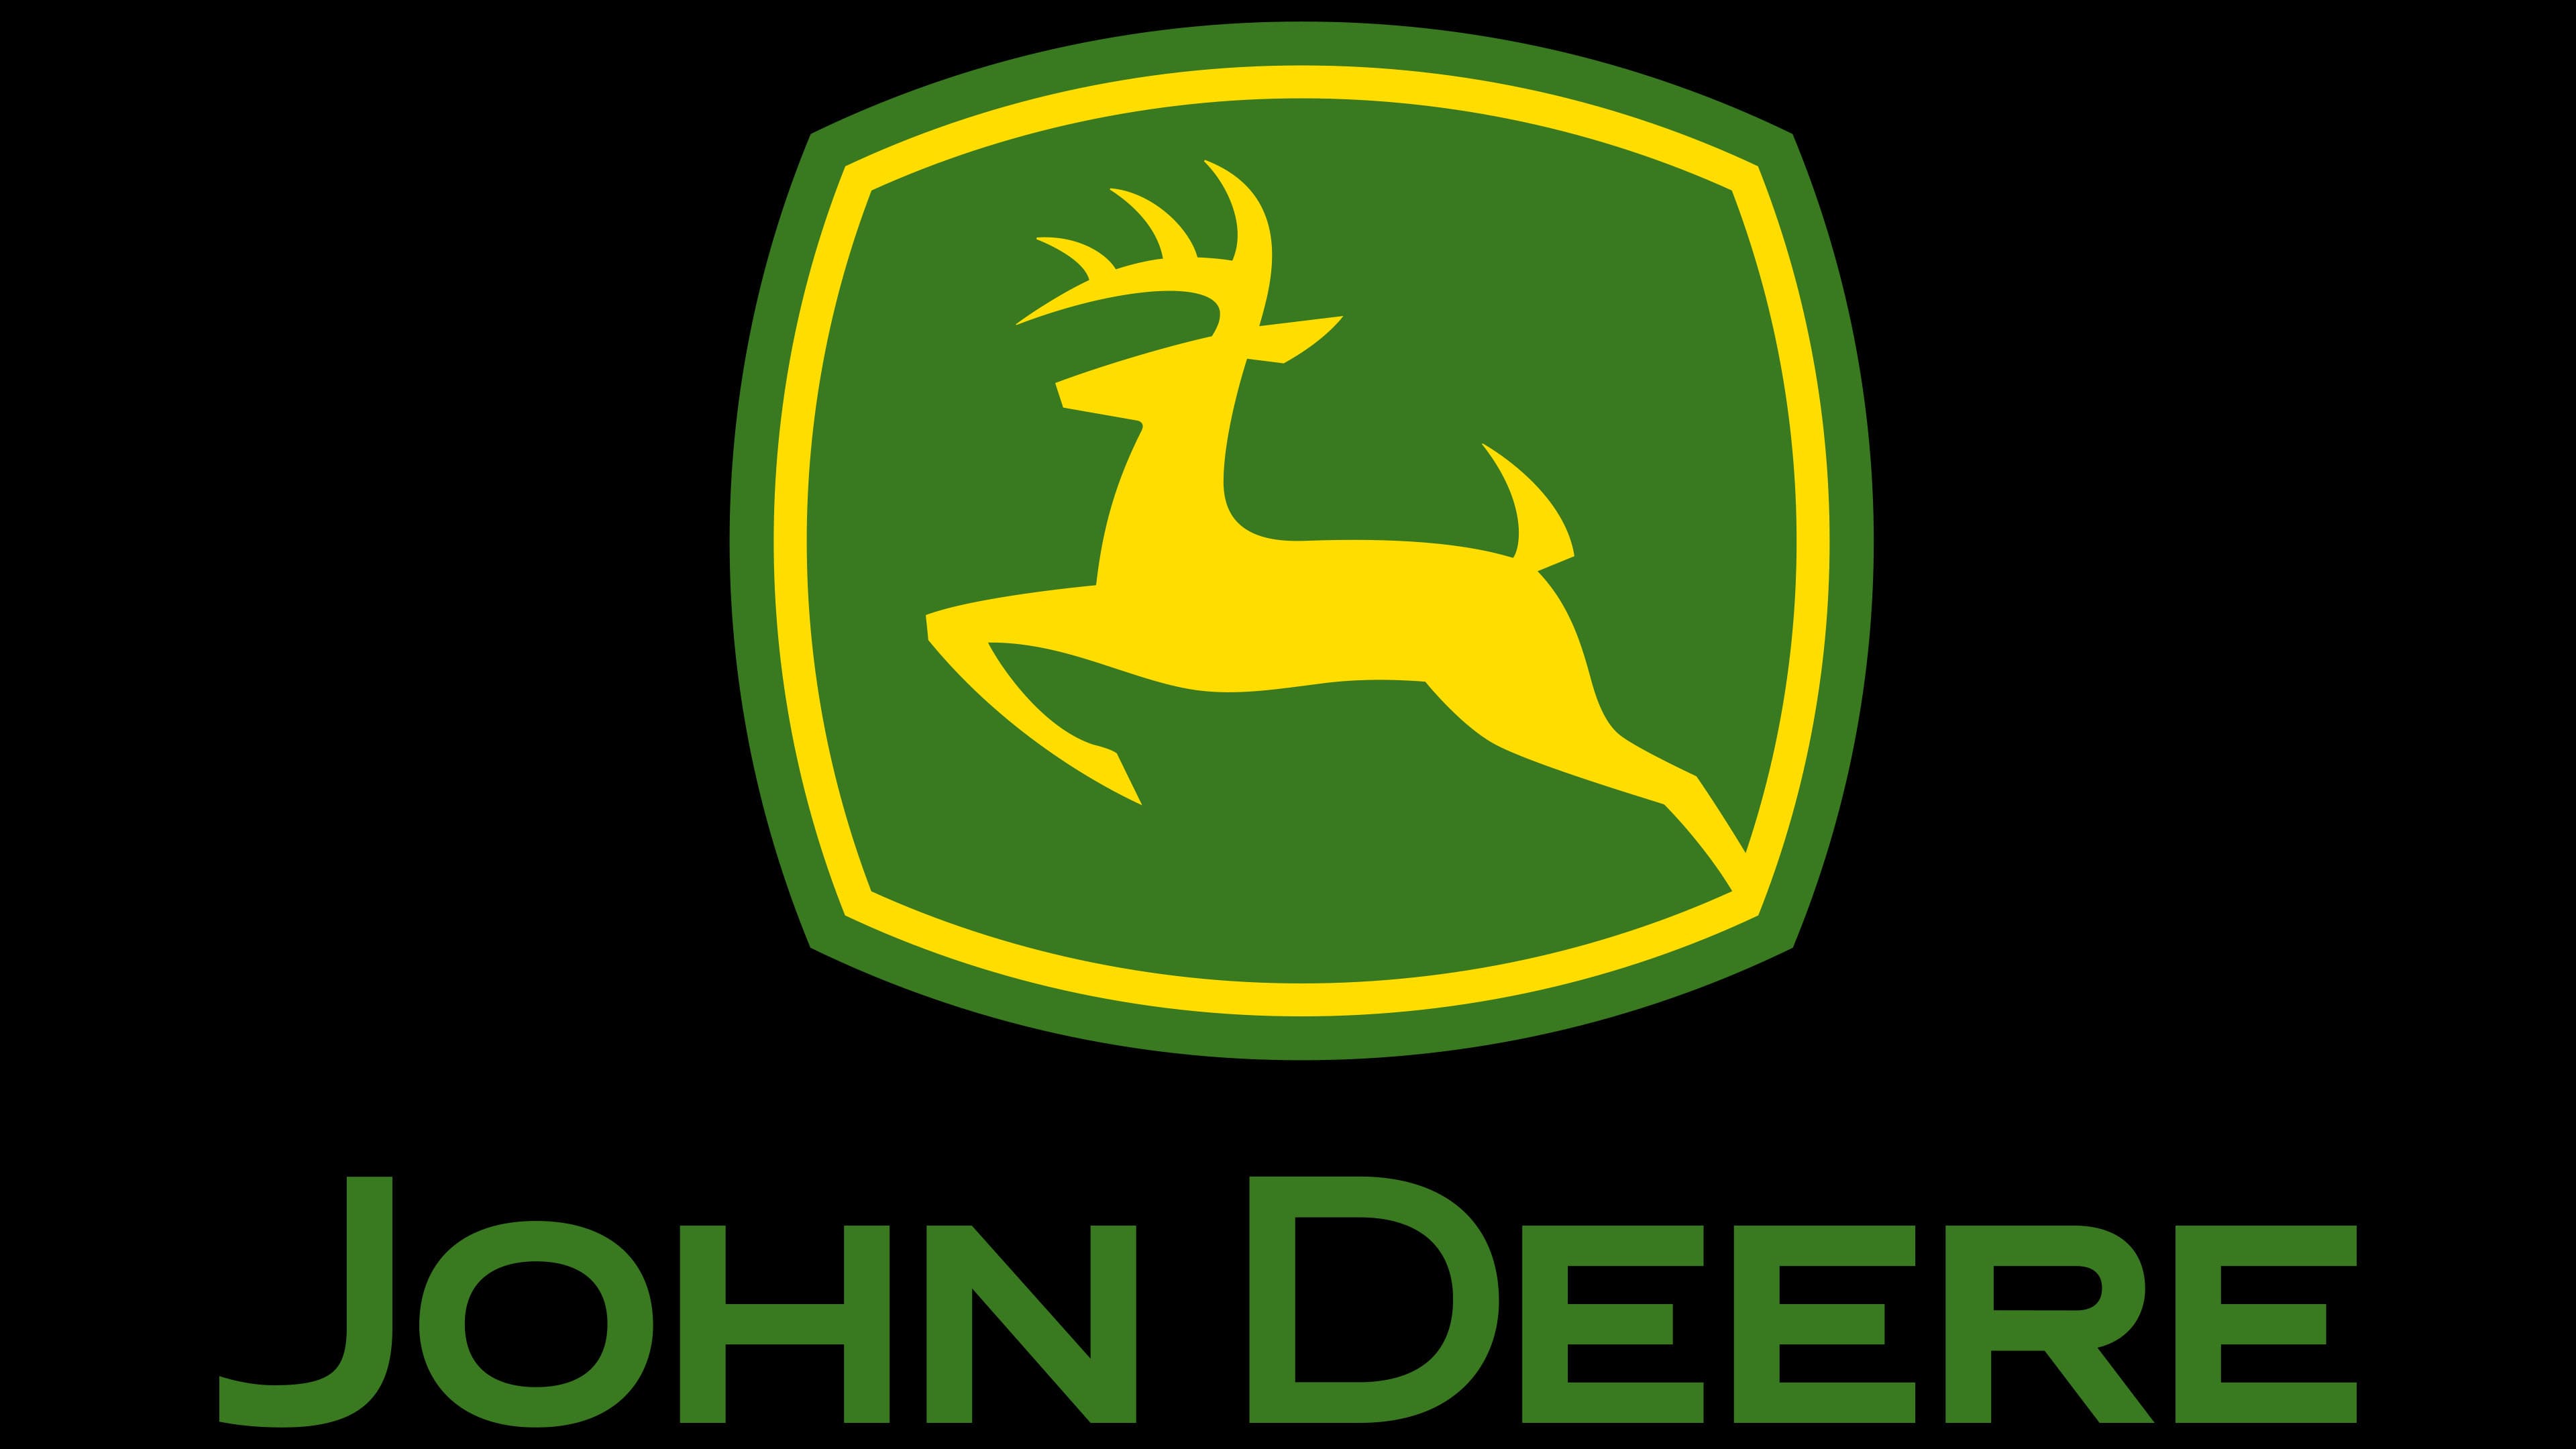 Logo De John Deere La Historia Y El Significado Del L - vrogue.co